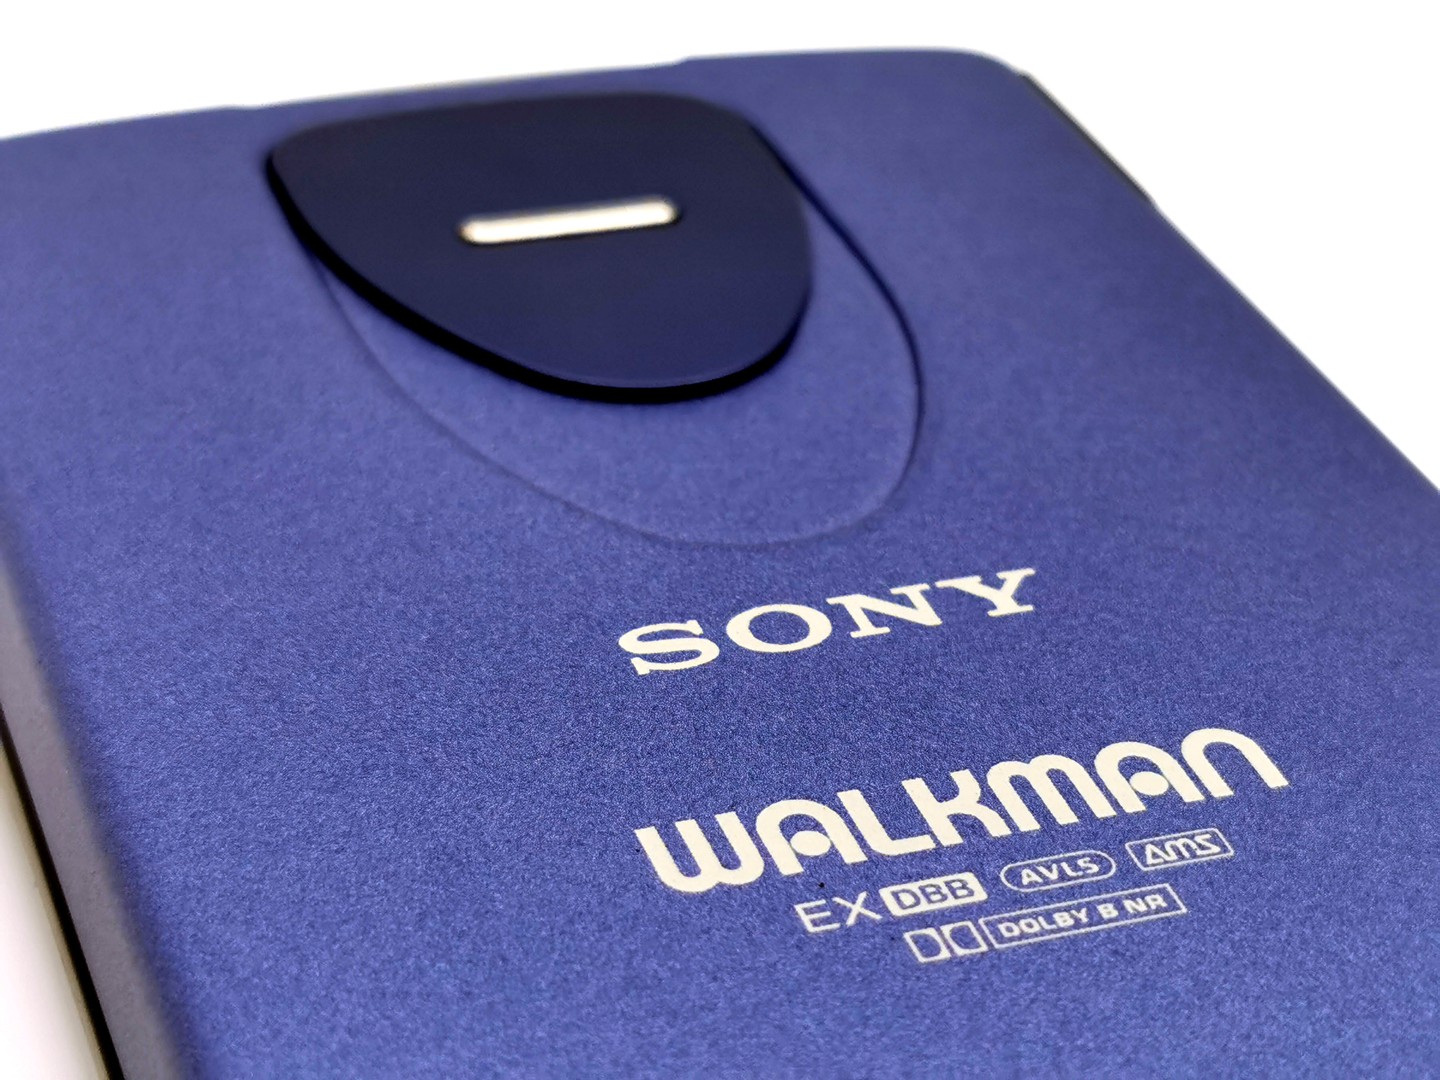 Sony-WM-EX1-Zoom-logo-and-controls-covered-ig-boxedwalkman